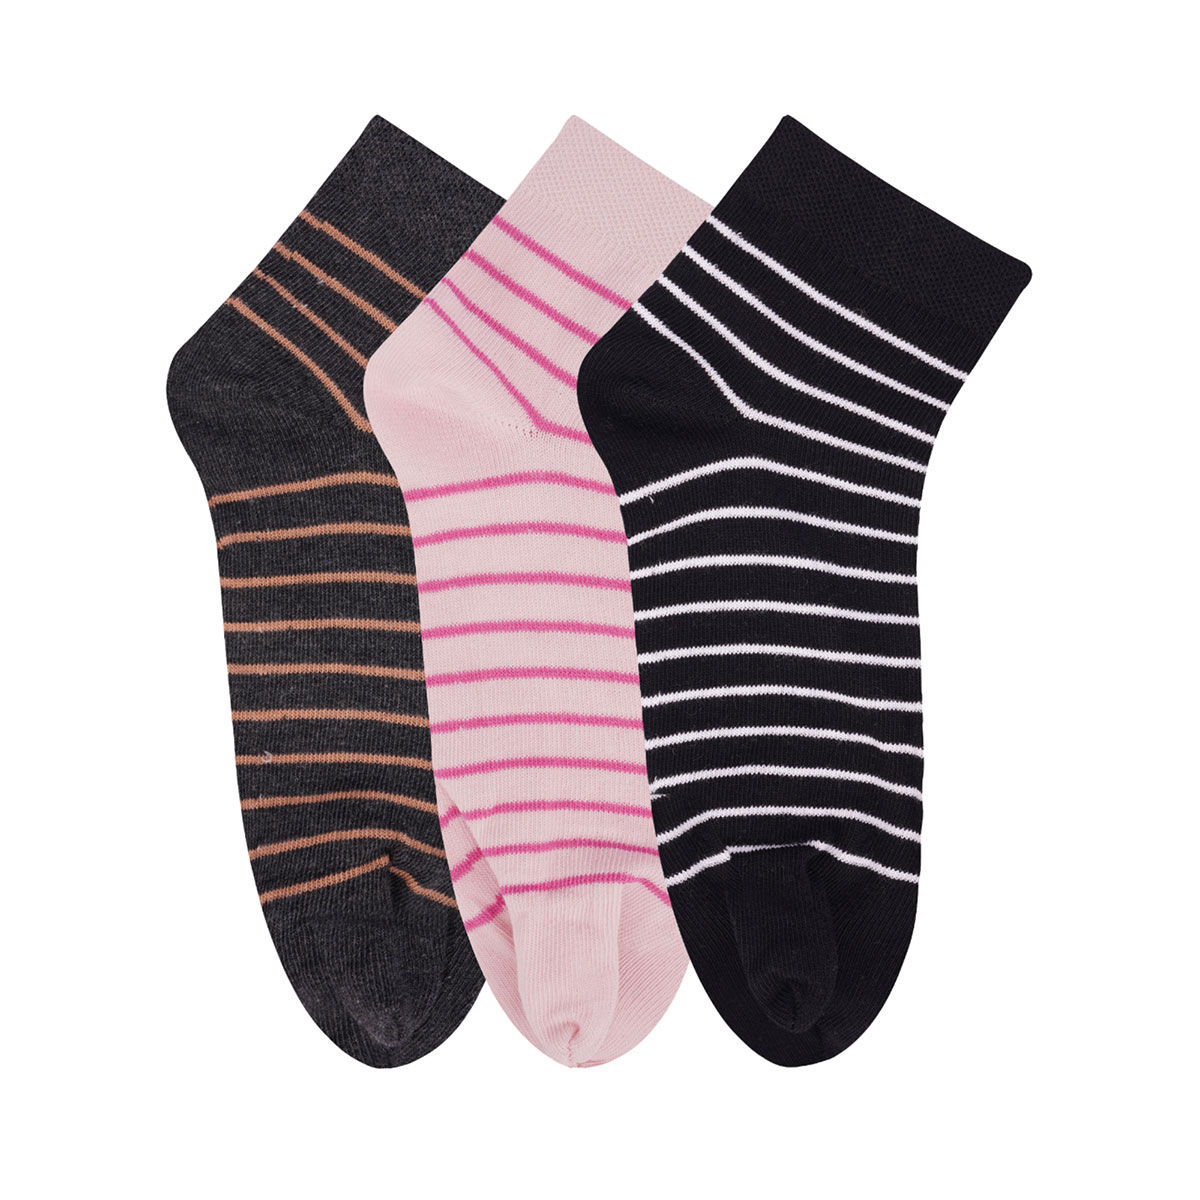 NEXT2SKIN Cotton Ladies Thumb Socks at Rs 115/pair in Chandigarh